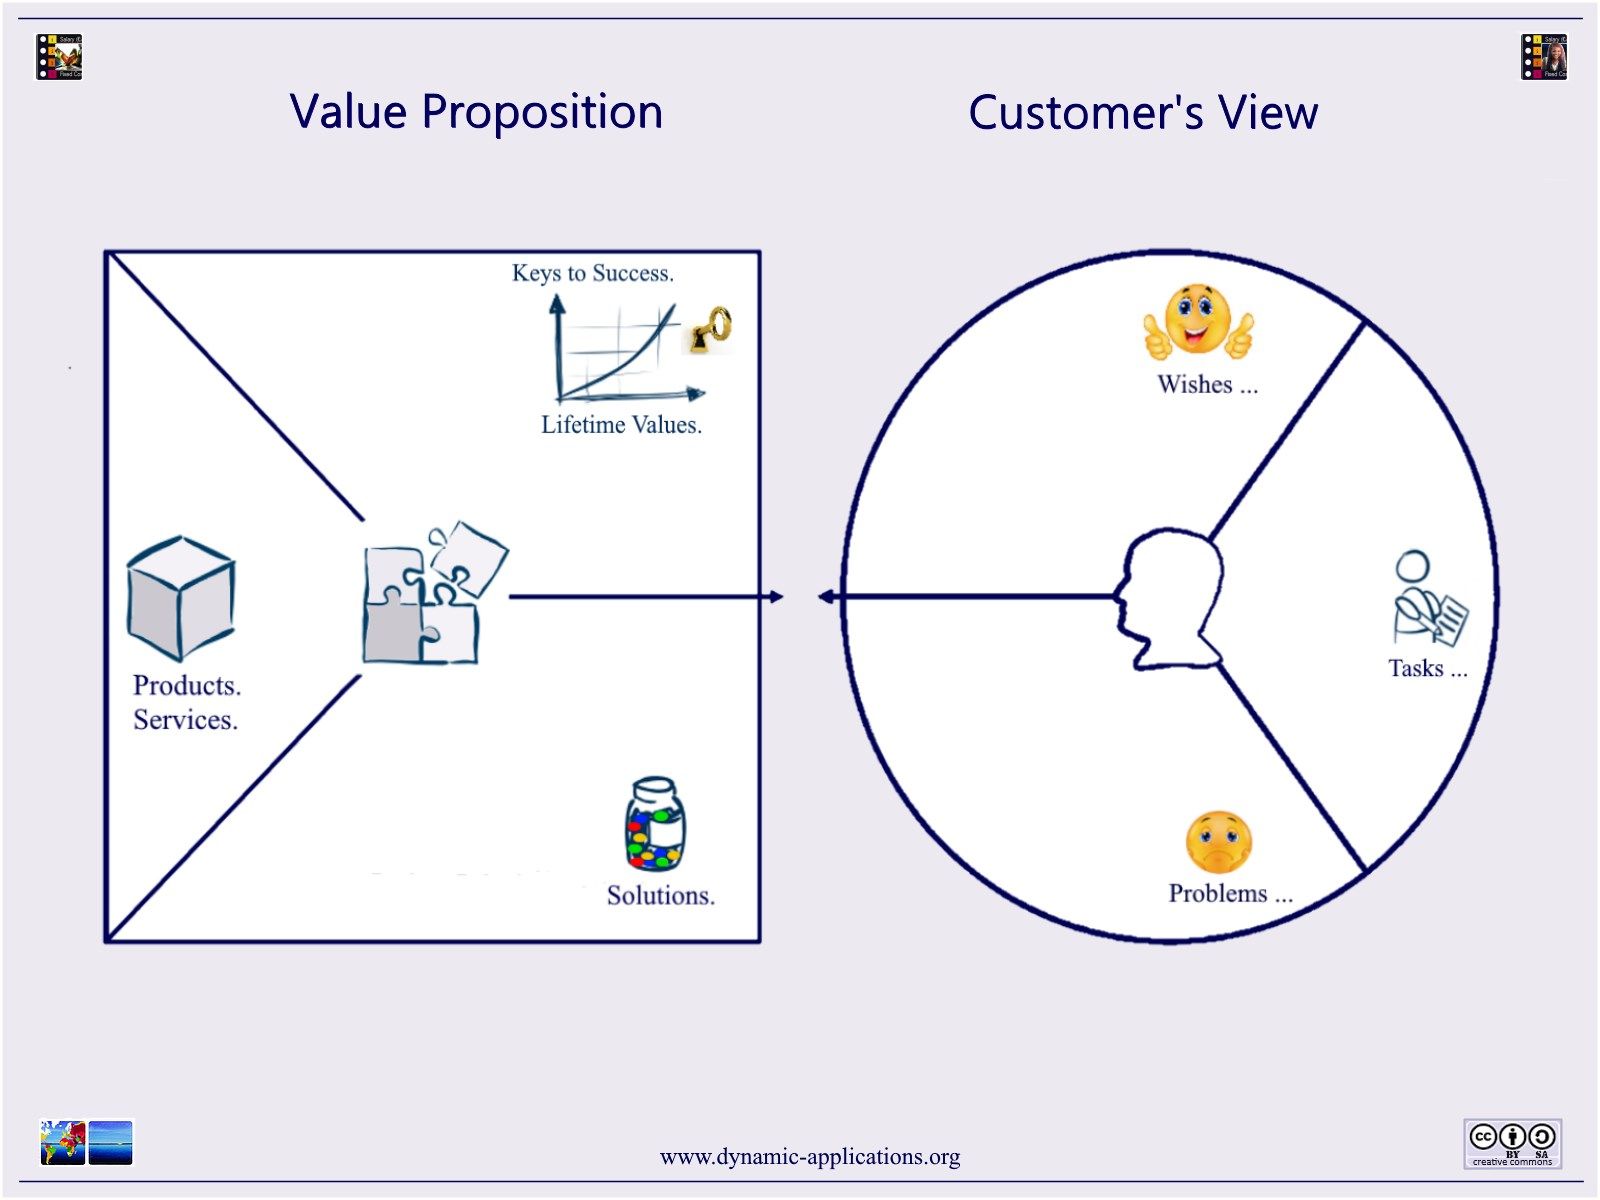 Value Proposition Canvas - define your Product in Lifetime Value ($€& / h).